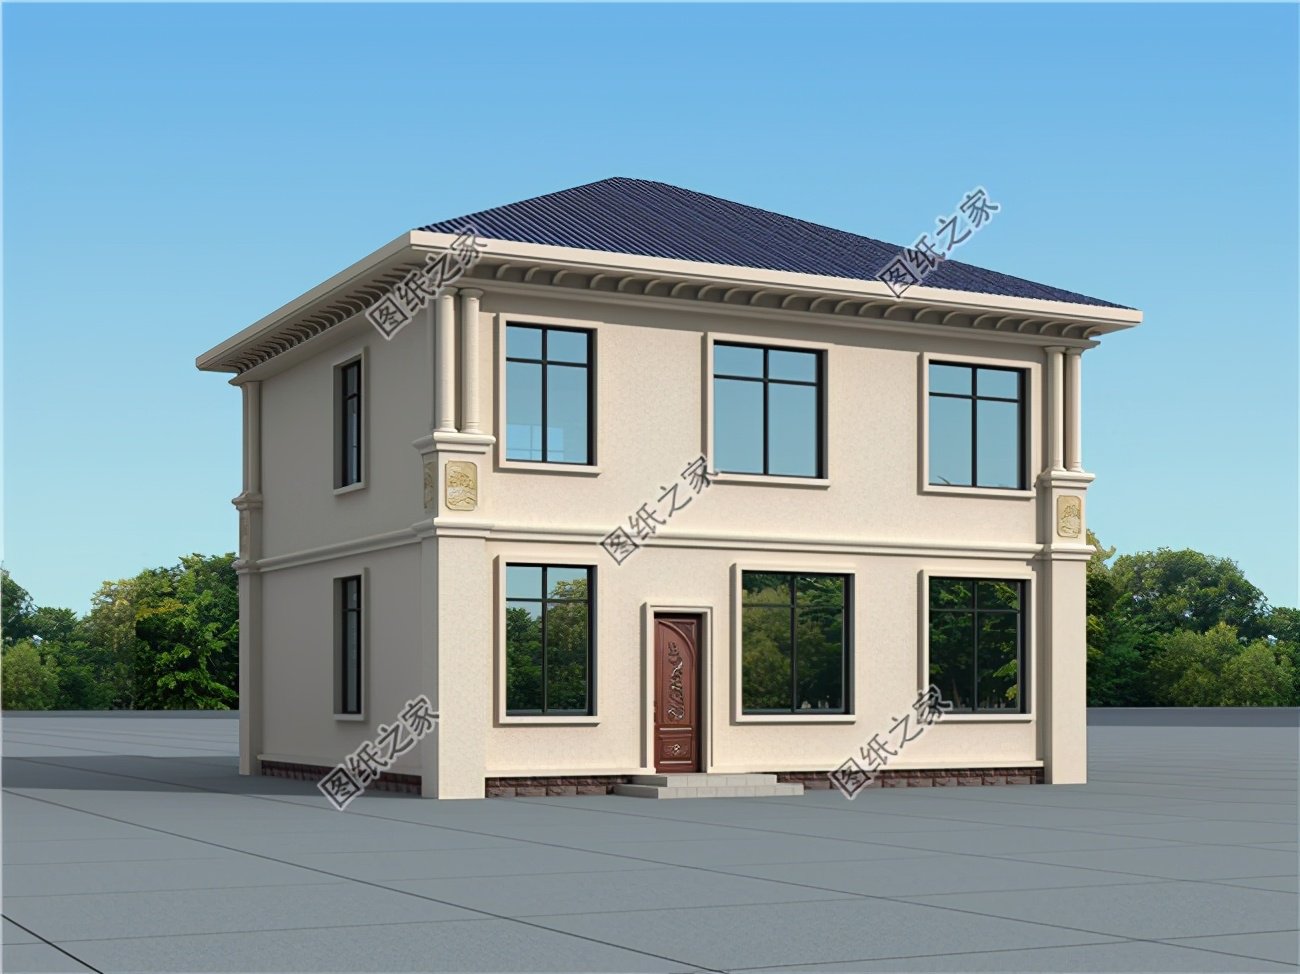 10x12米二层房屋设计图,诠释农村房子应该怎么建